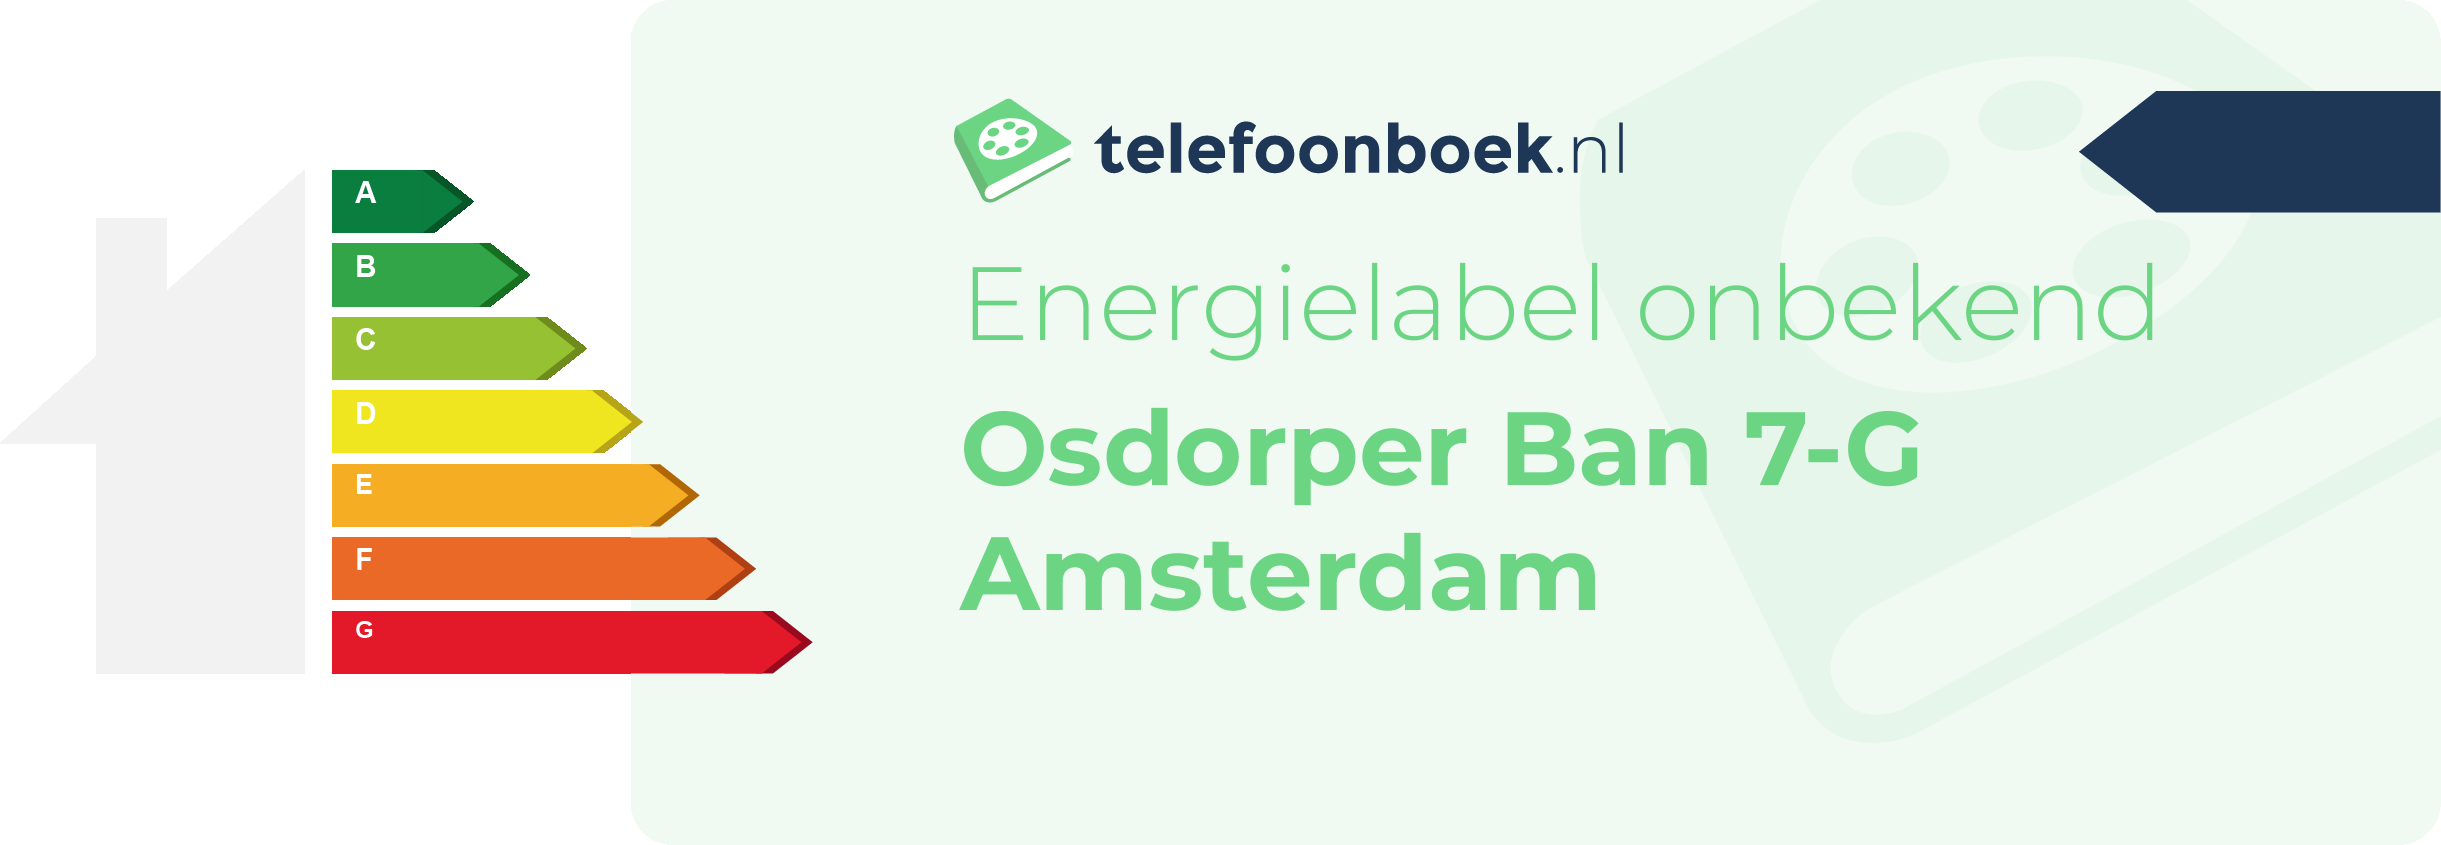 Energielabel Osdorper Ban 7-G Amsterdam